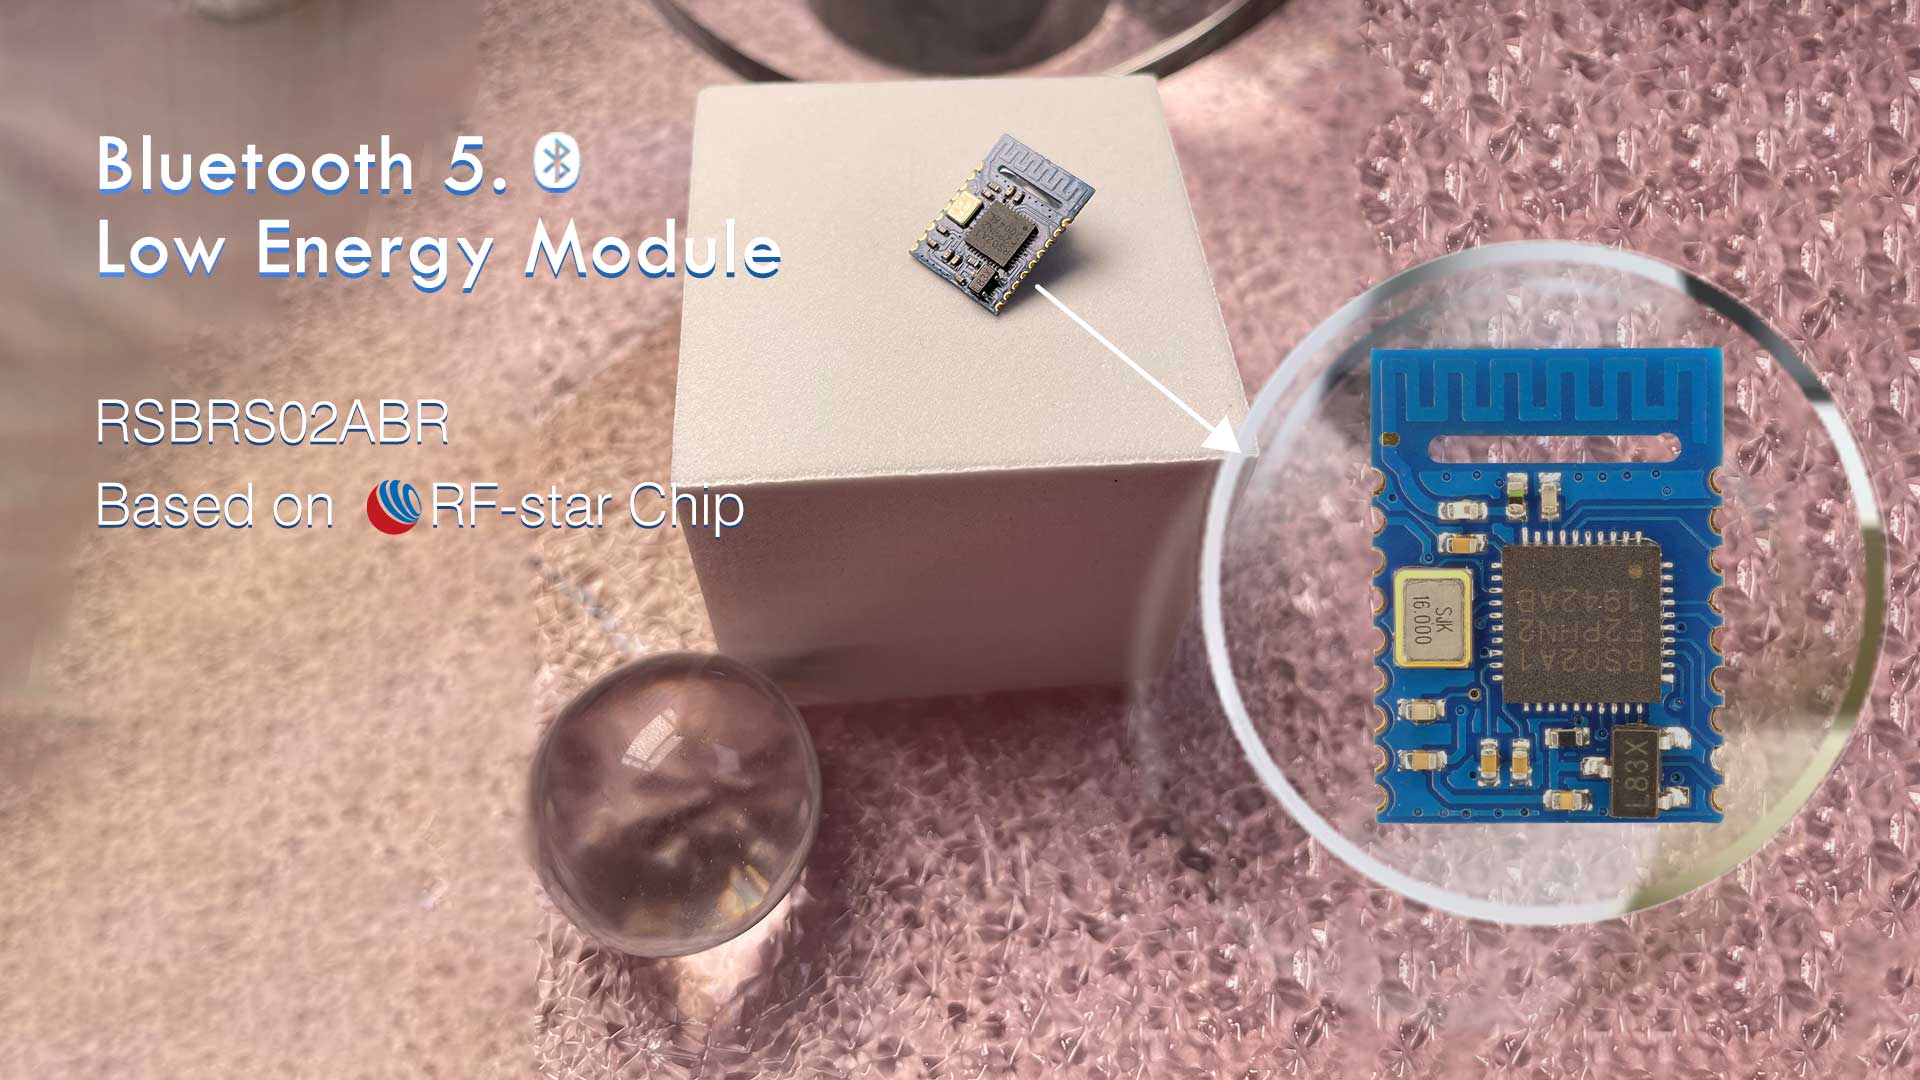 Bluetooth 5.0 Low Energy Module RSBRS02ABR Based on RF-star Chip